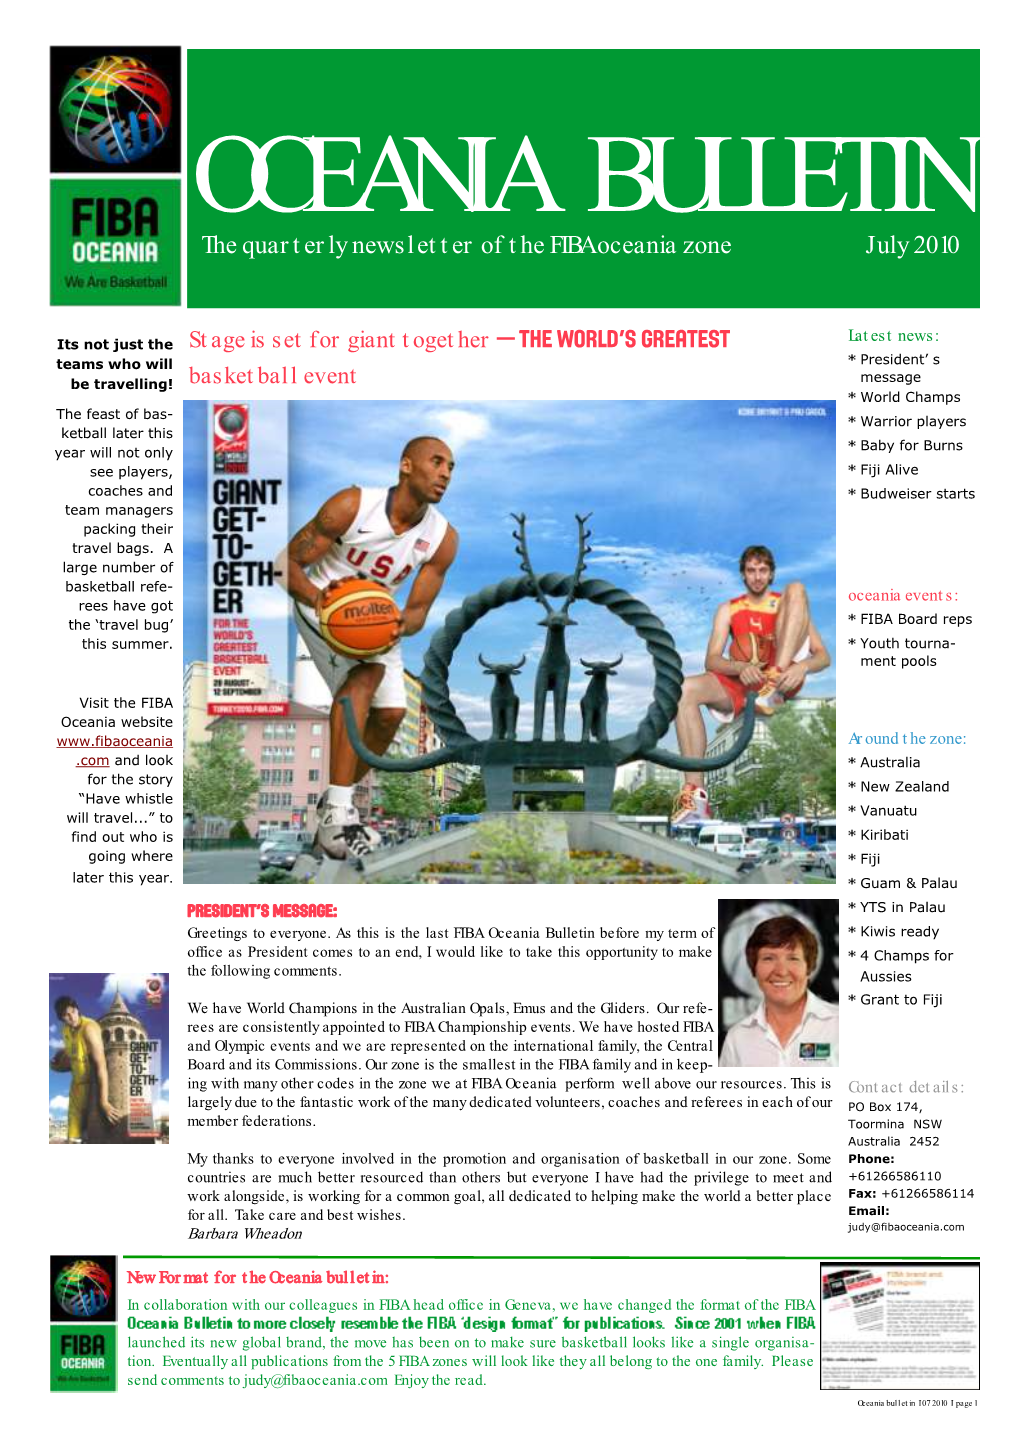 OCEANIA BULLETIN the Quarterly Newsletter of the FIBA Oceania Zone July 2010